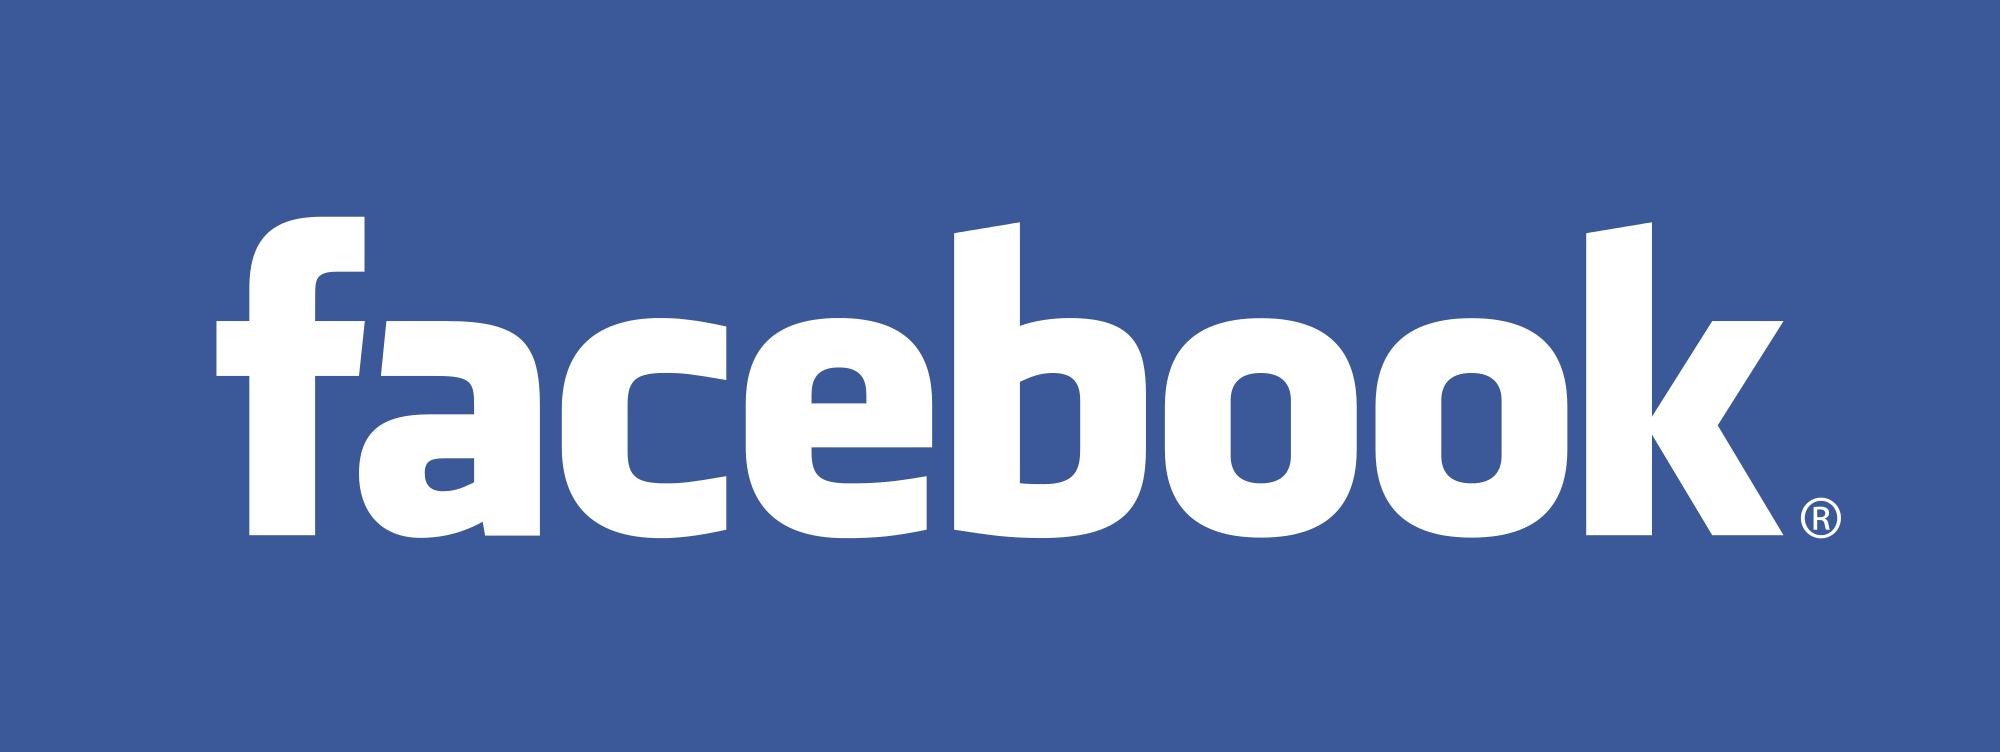 Facebook Logo - File:Facebook.svg - Wikimedia Commons